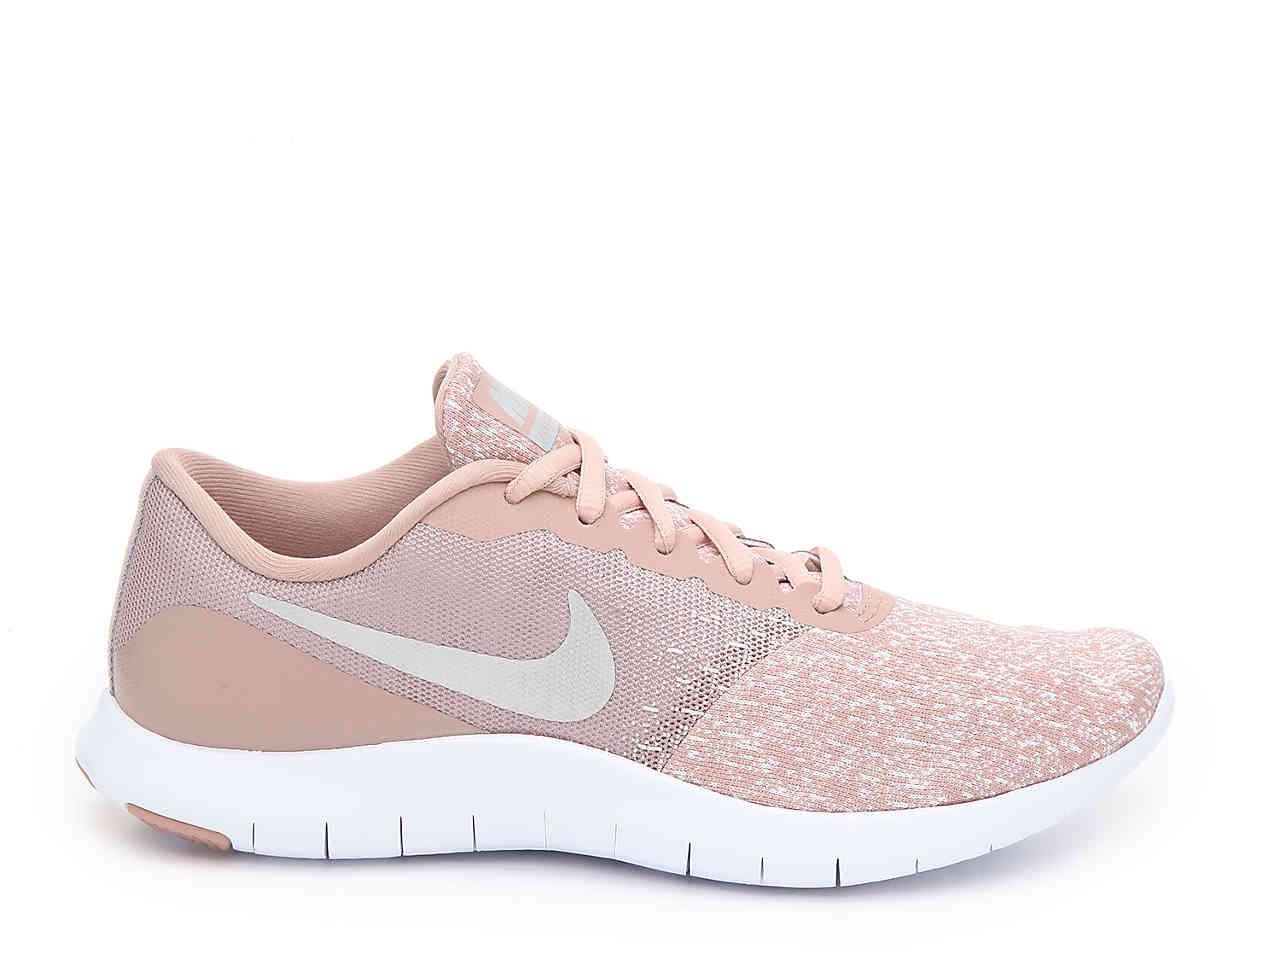 Nike Flex Contact Lightweight Running Shoe in Pink | Lyst